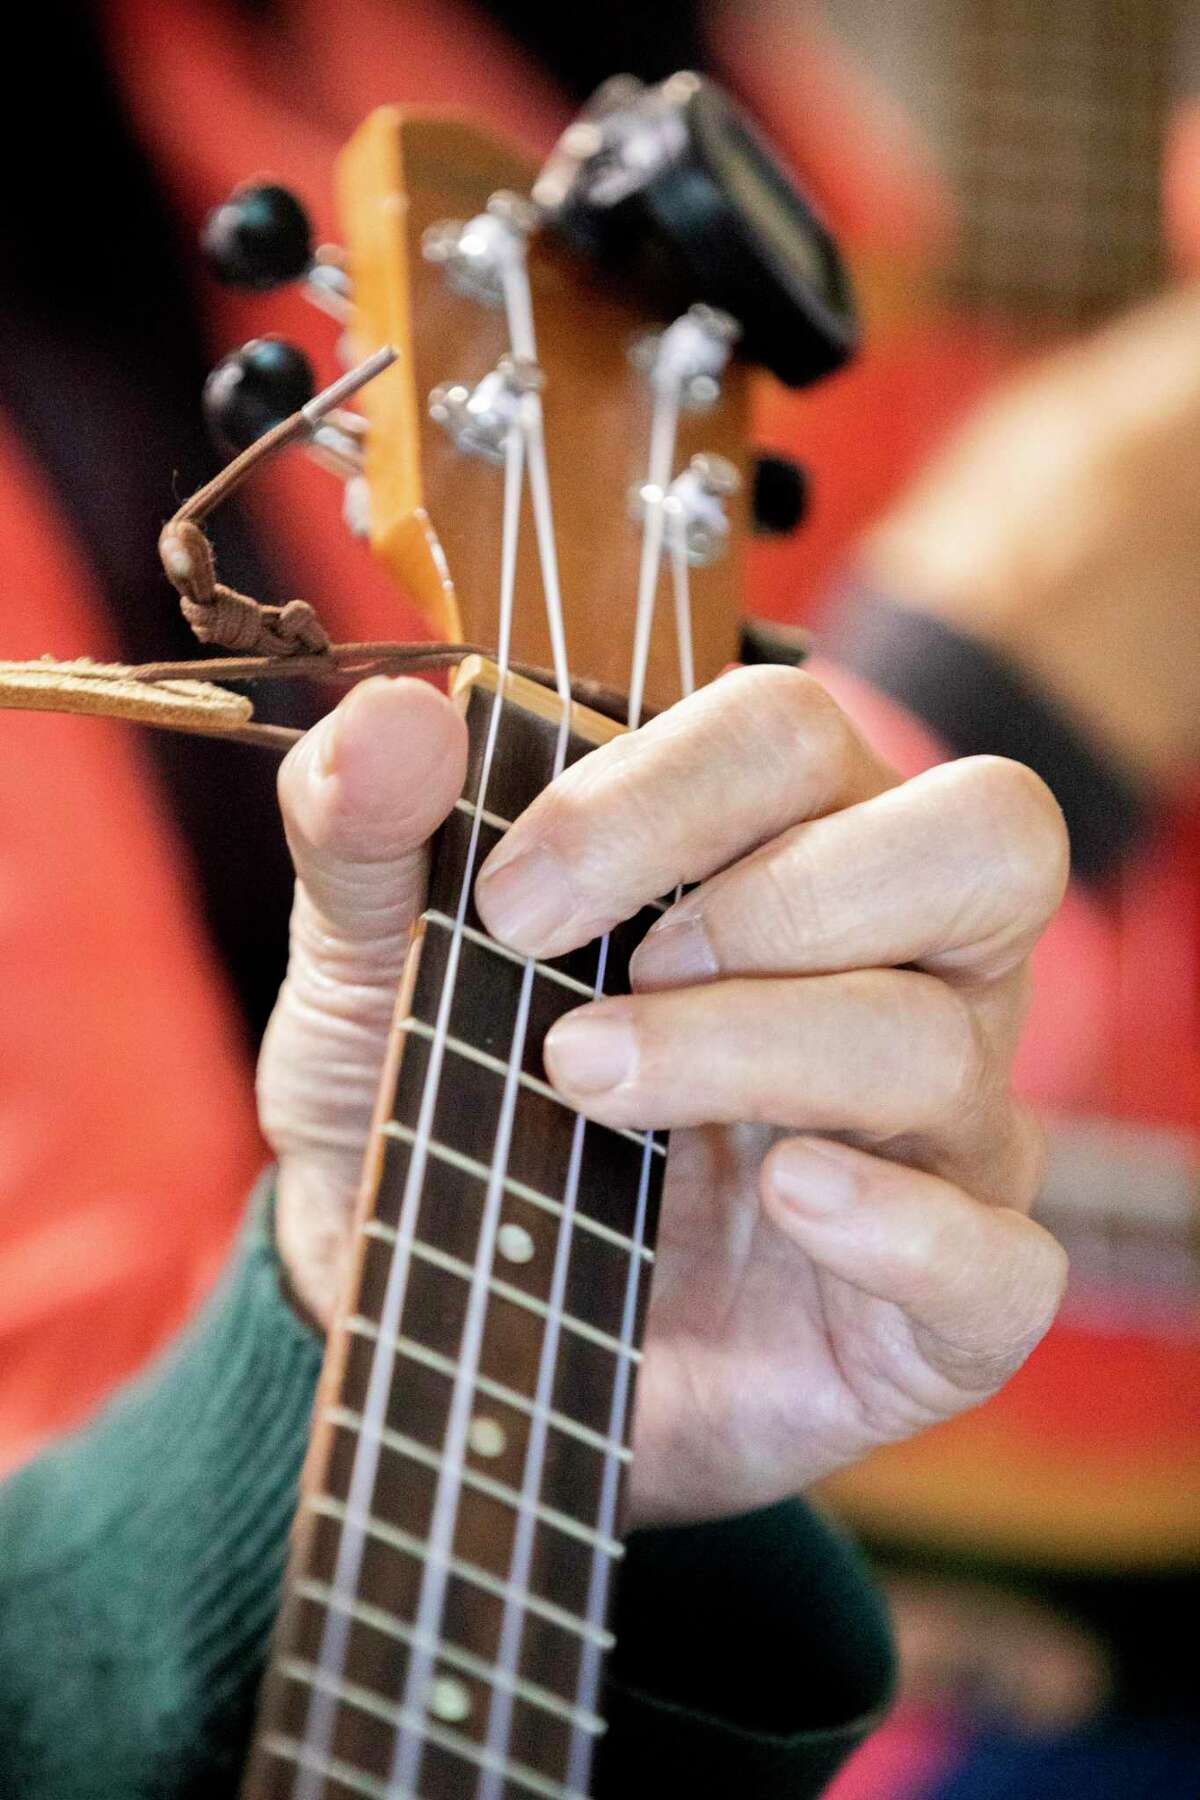 More than 100 ukulele players from the Walnut Creek retirement community are raising money to buy ukuleles for Bay Area elementary schools.